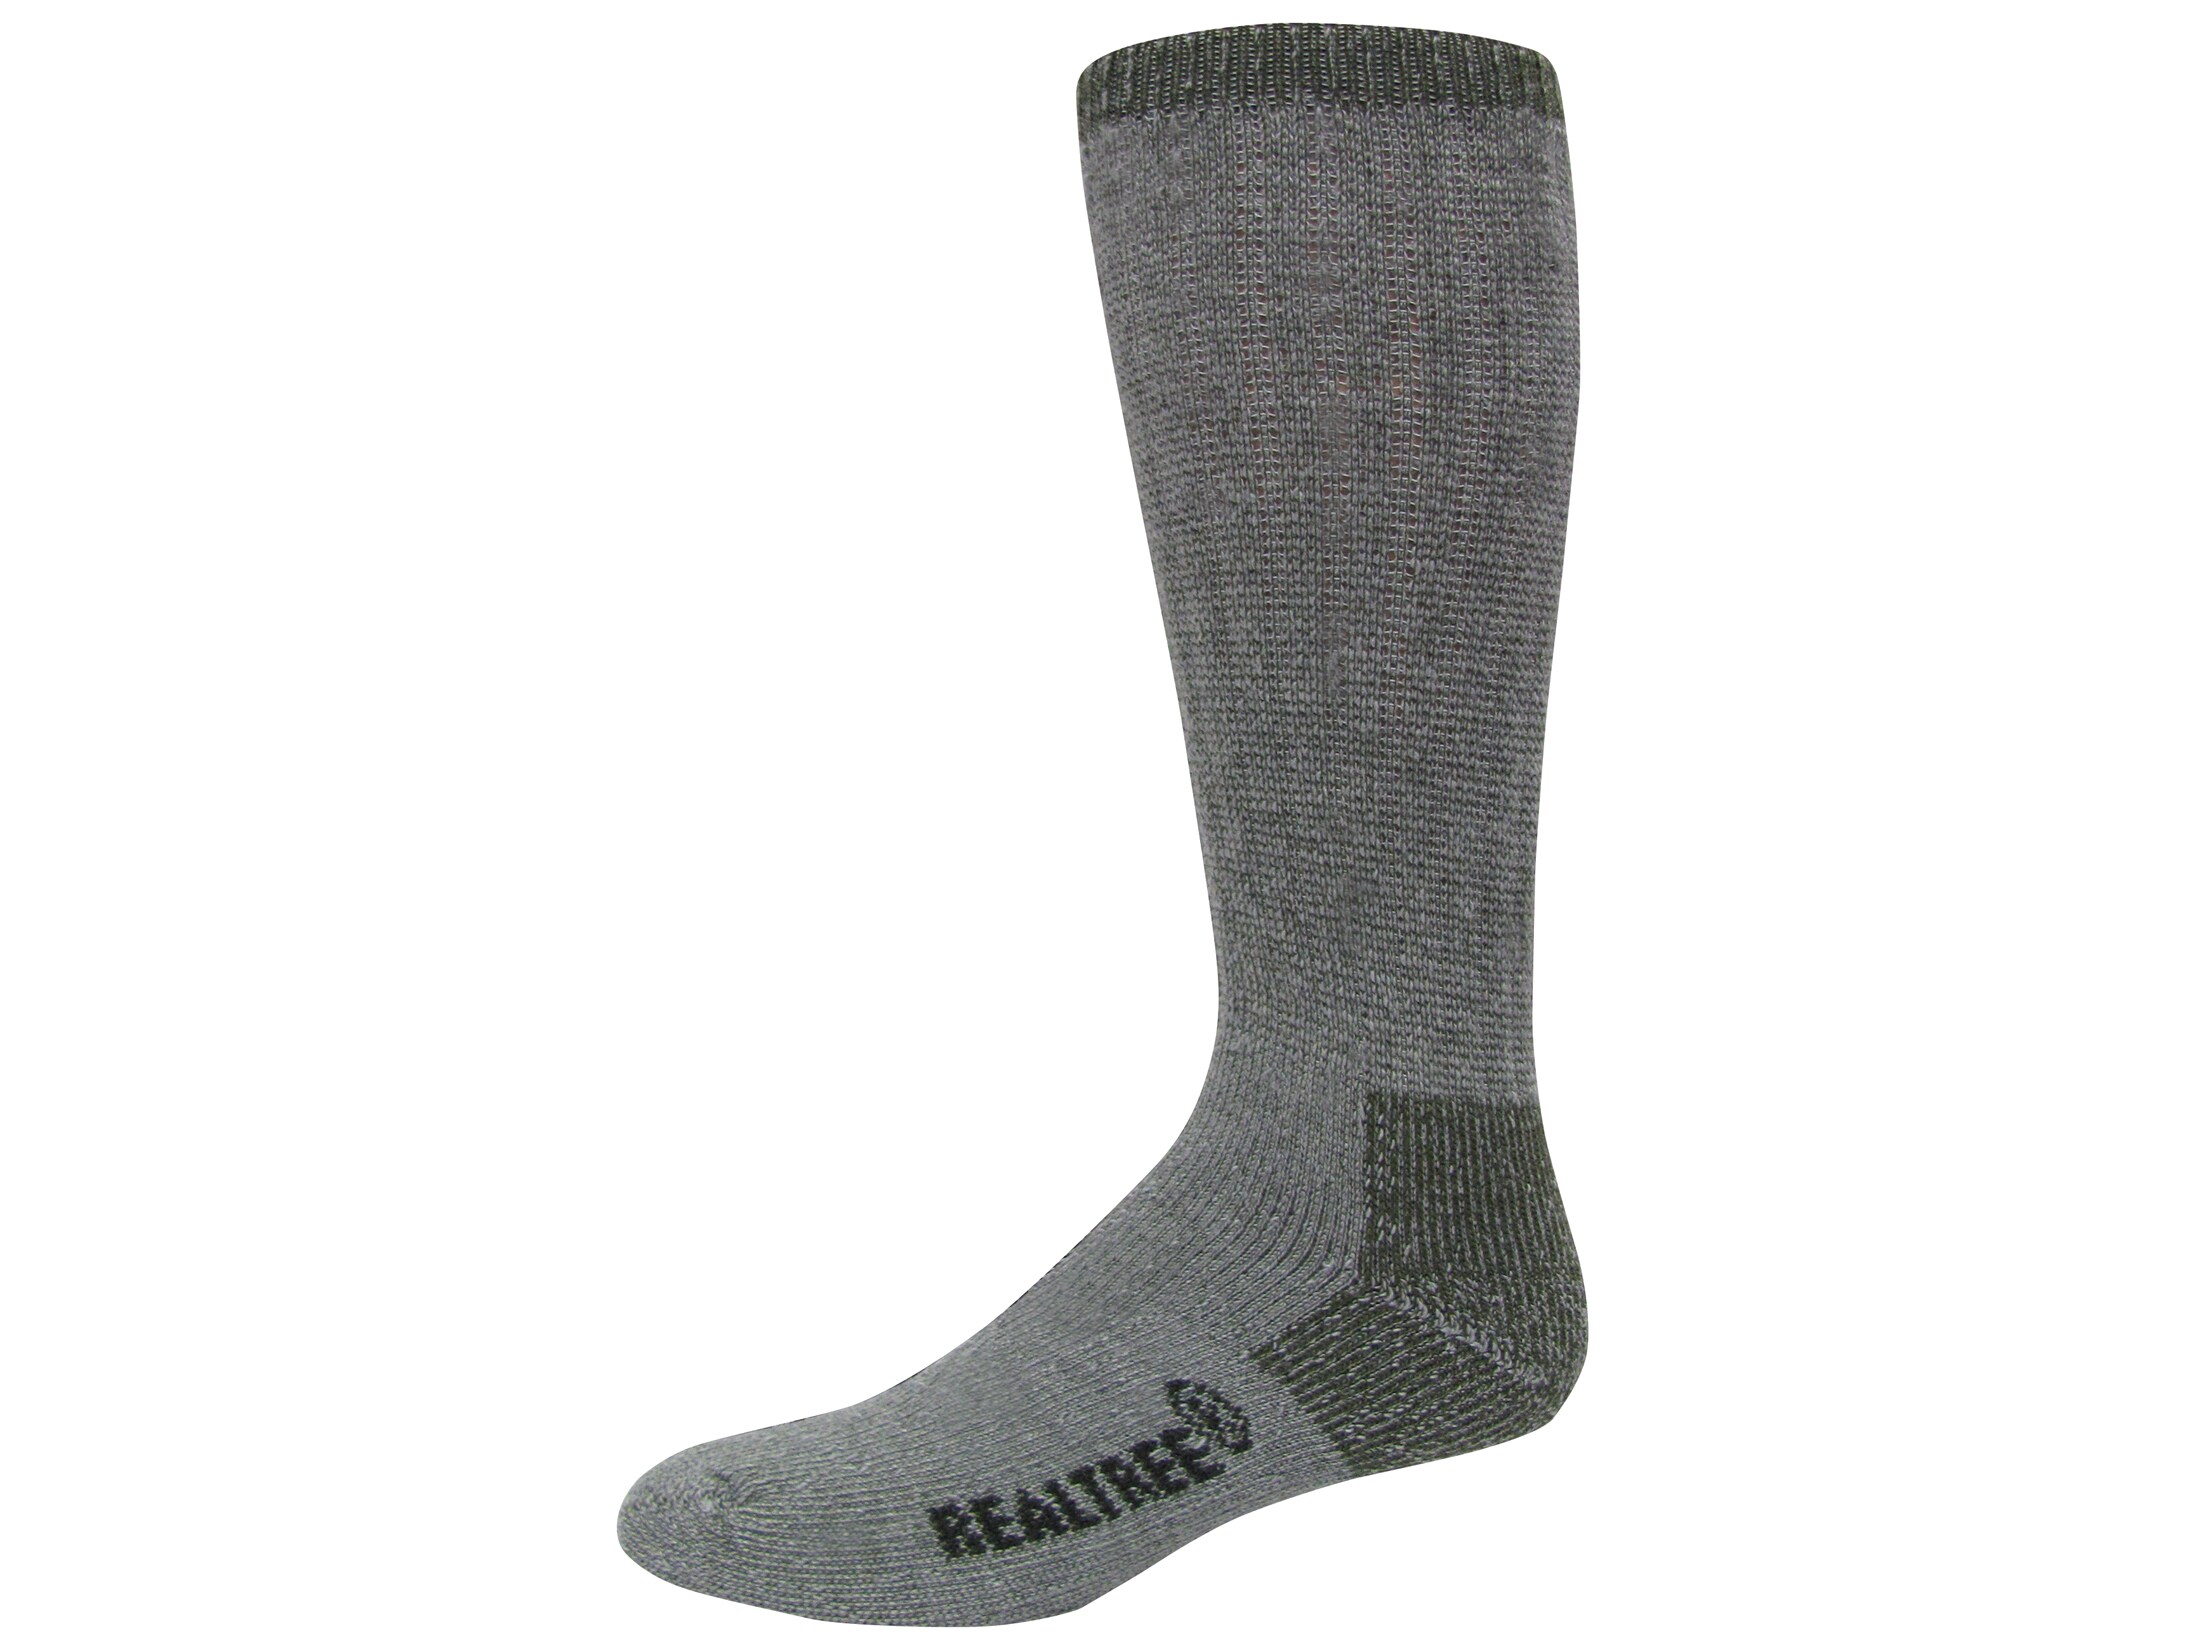 Realtree Men's Heavyweight Wool Blend Boot Sock Wool Blend Gray Large